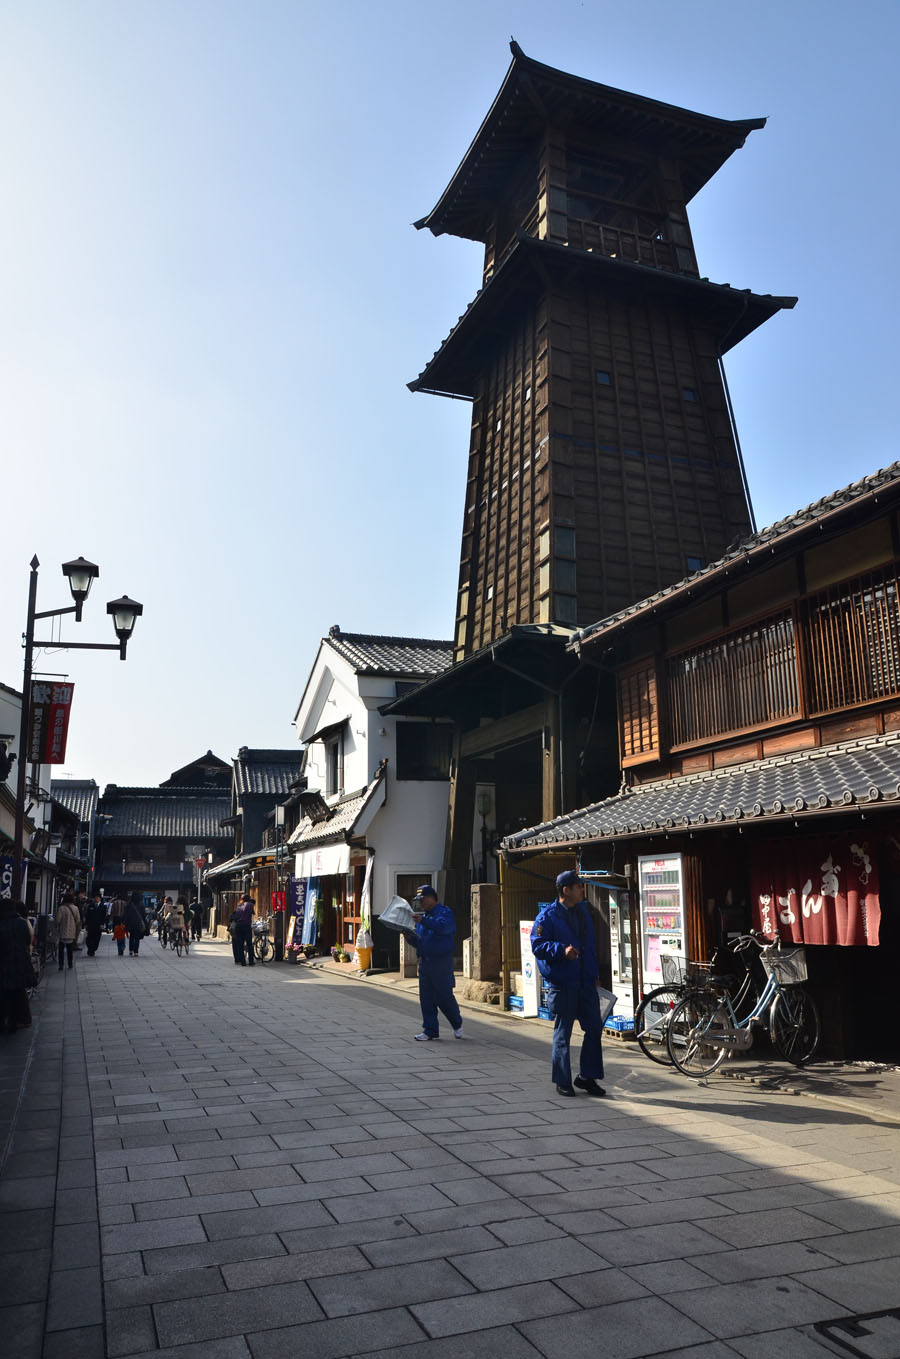 The bell tower of old town, Kawagoe, Saitama Pref.